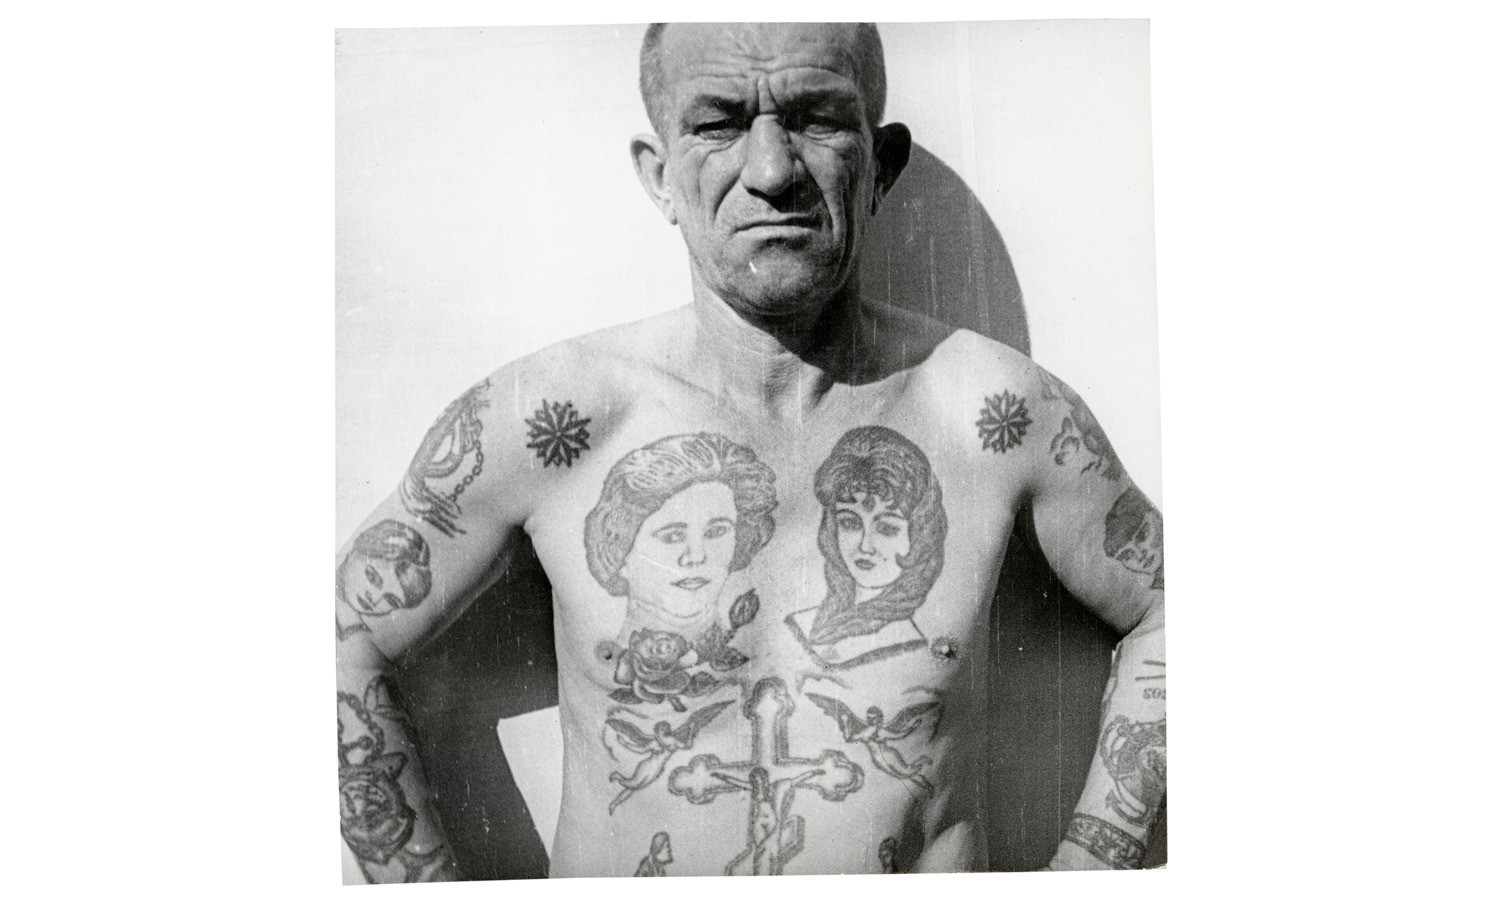 Russian Criminal Tattoo Archive — Joe the Tattoo Guy